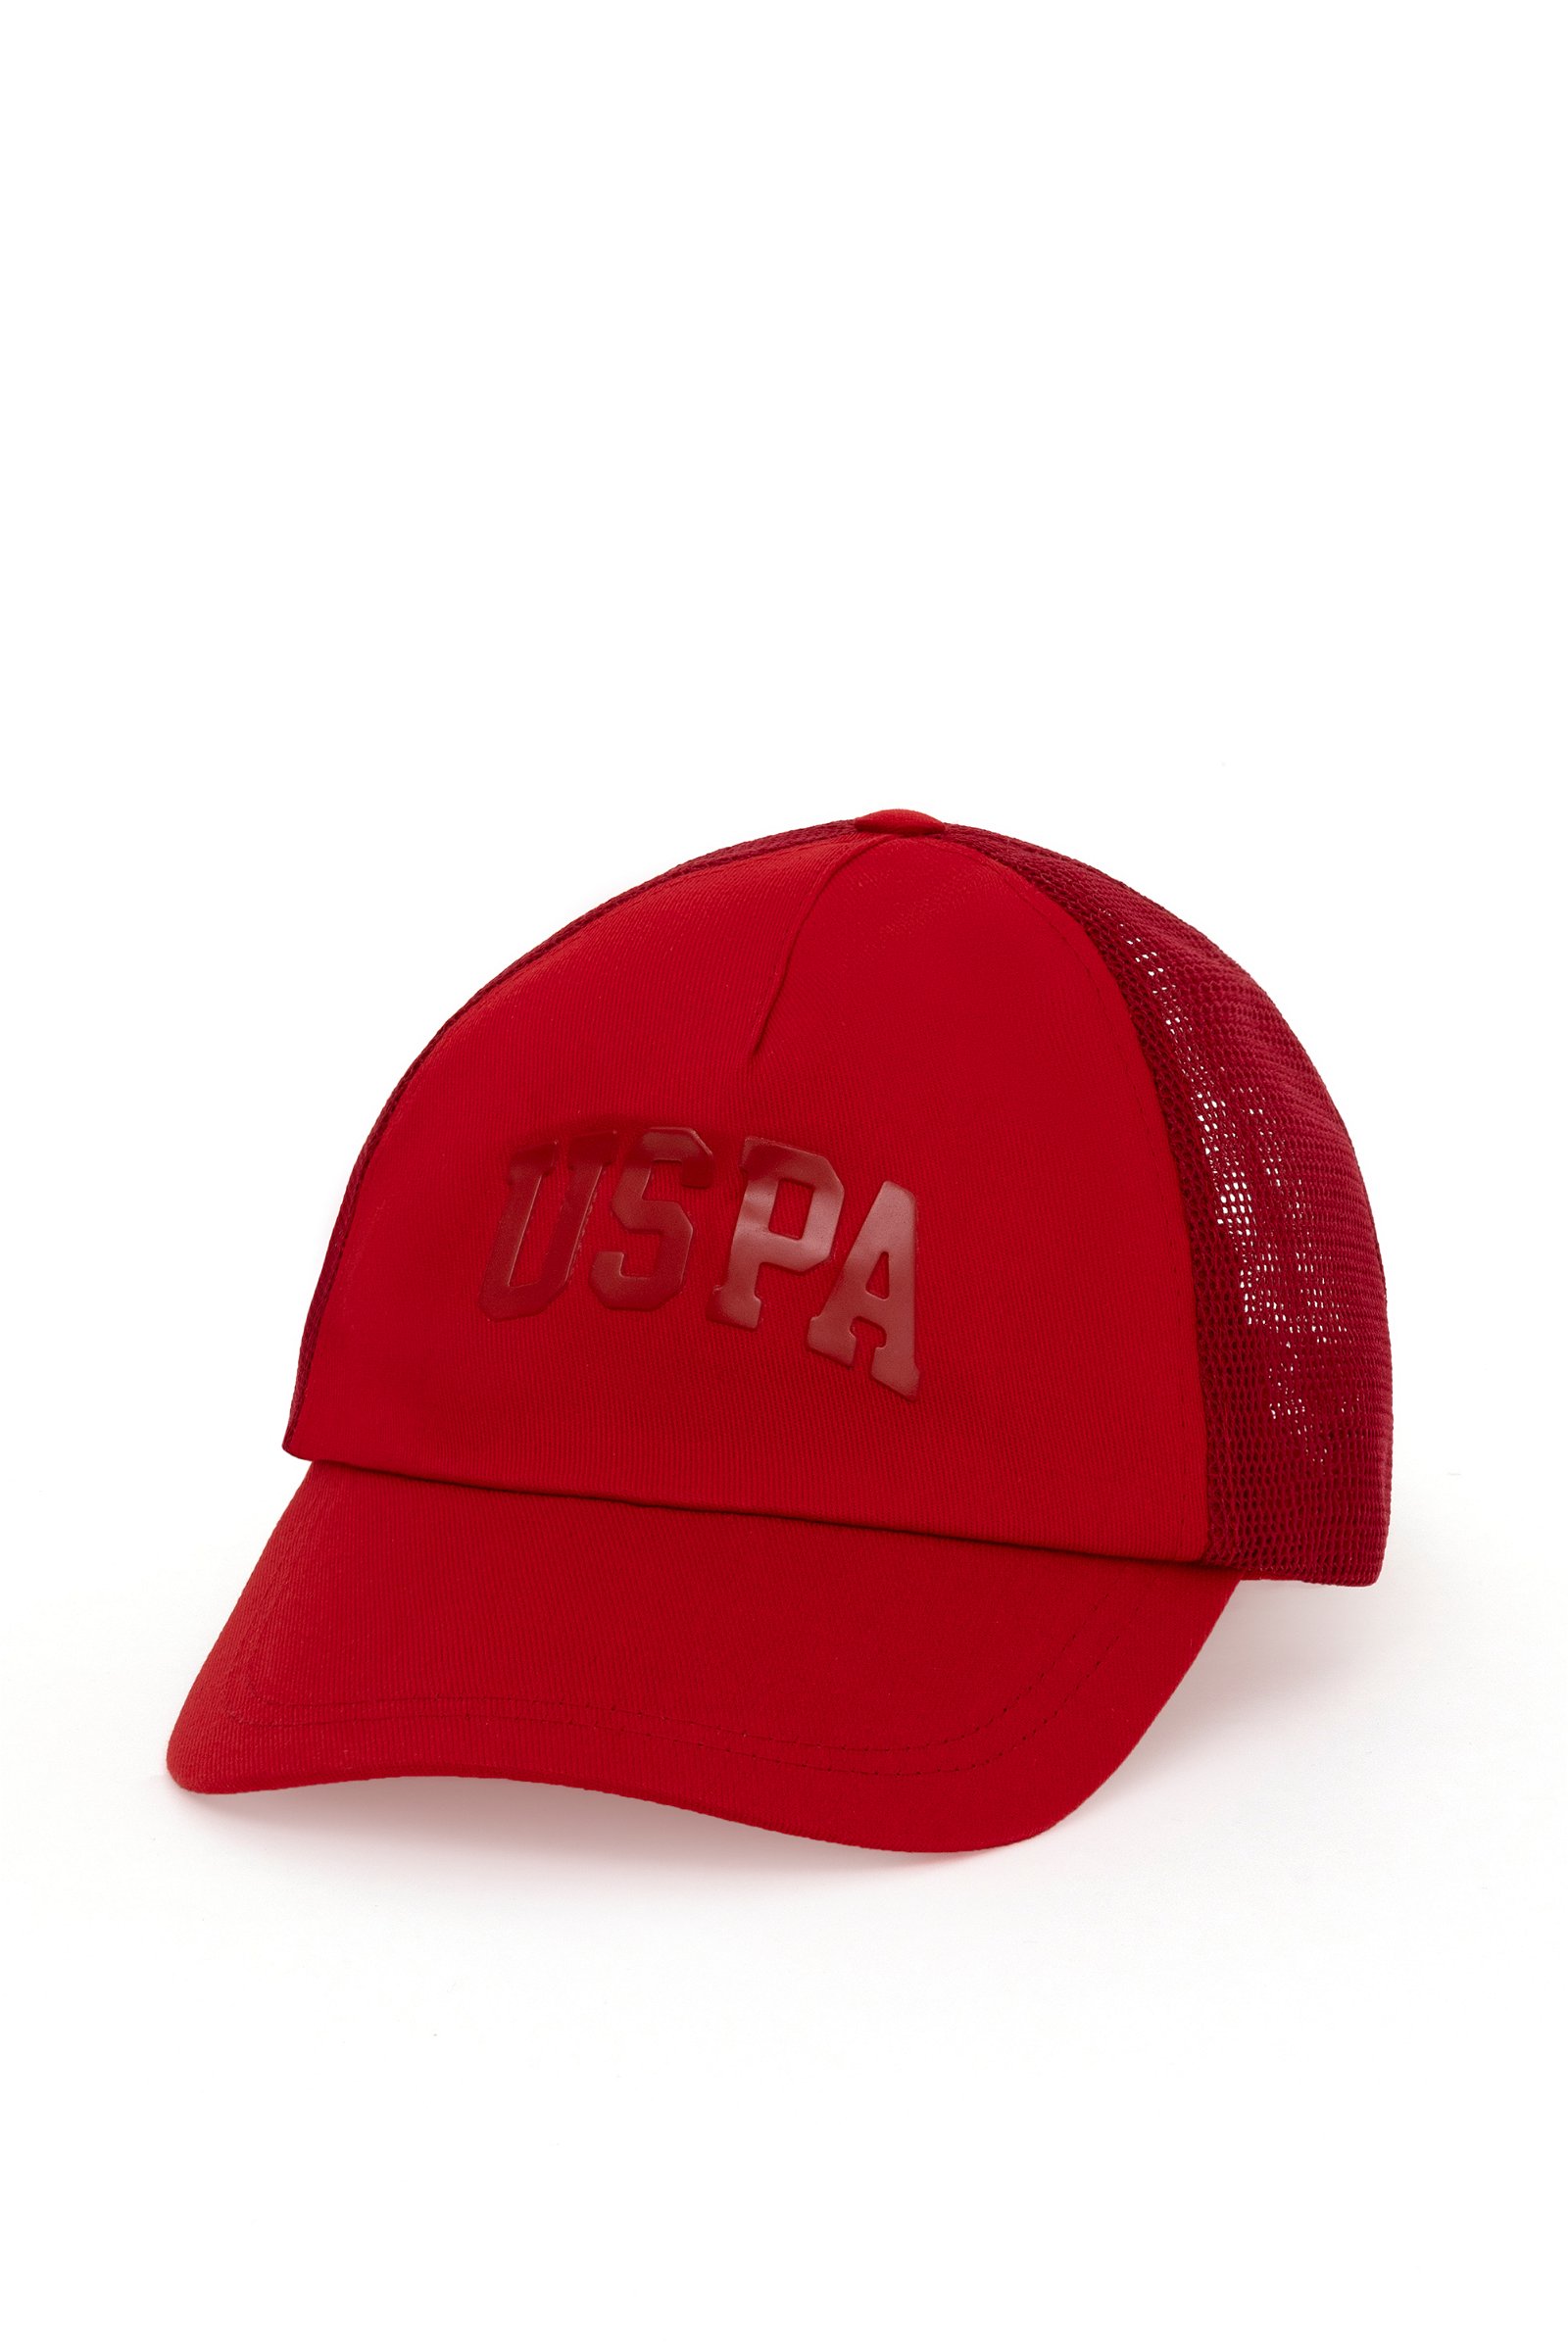 کلاه کاپ دار  قرمز  رگولار  زنانه یو اس پولو | US POLO ASSN